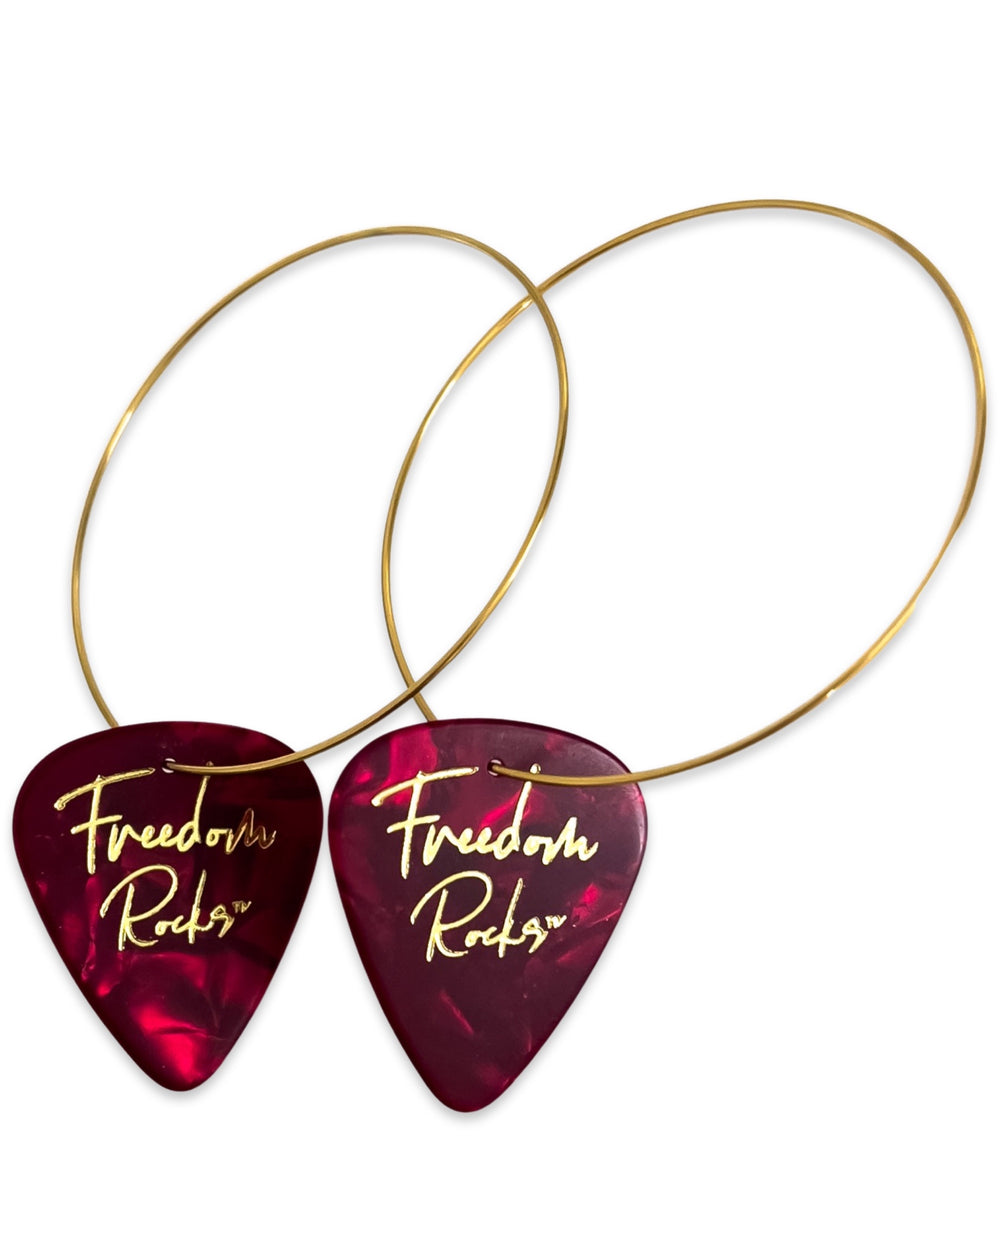 WS Freedom Rocks Red Reversible Single Guitar Pick Earrings